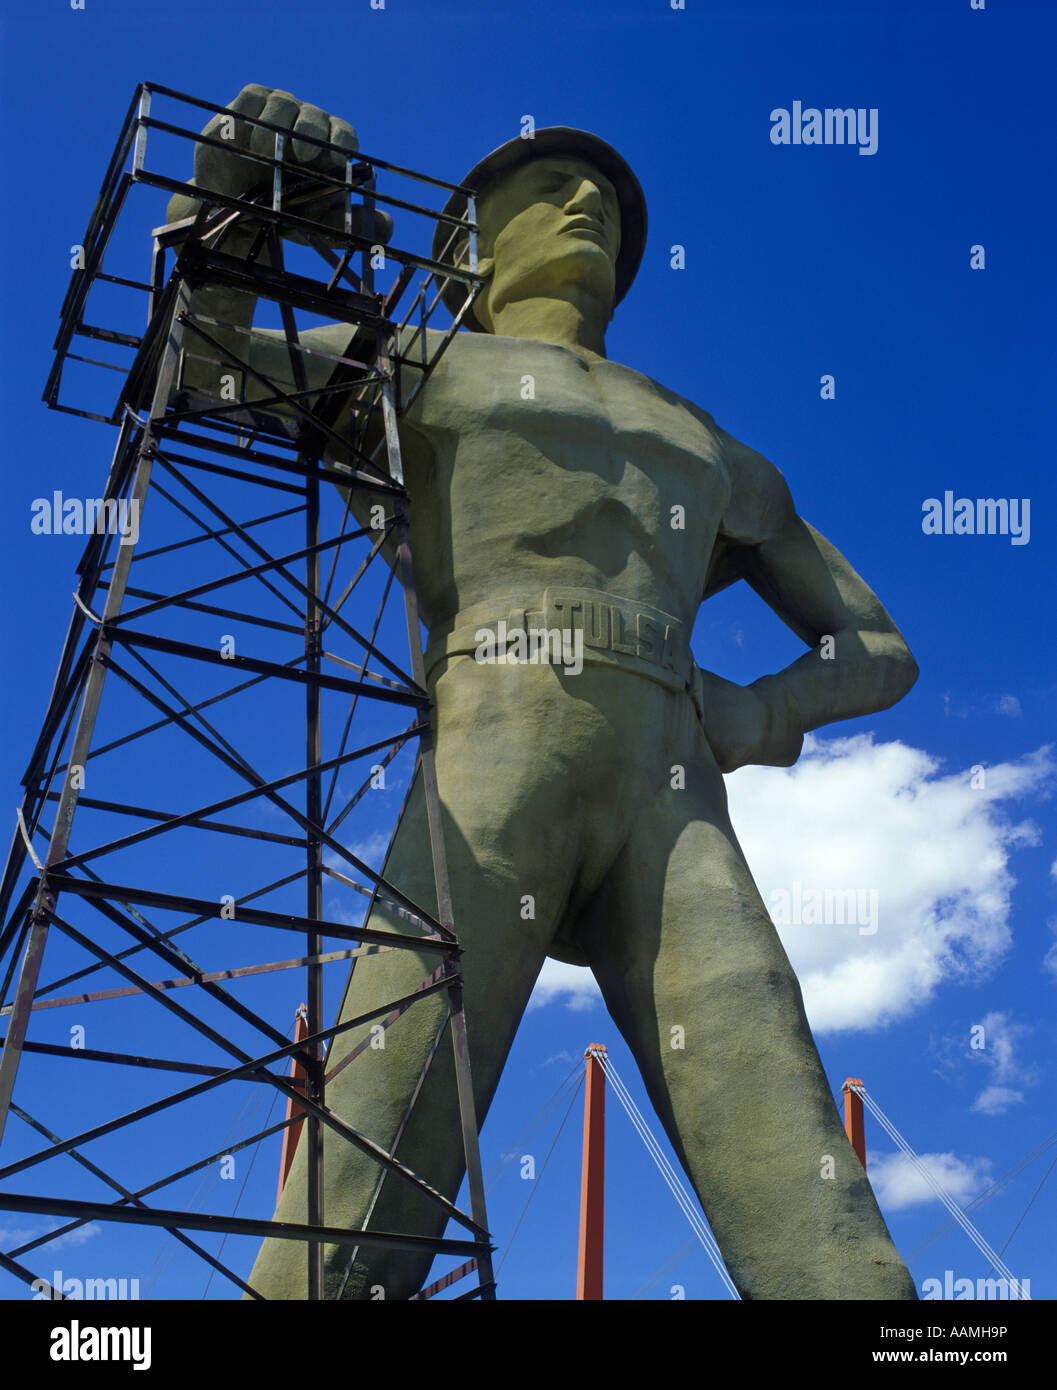 Golden Driller Statue in Tulsa, Oklahoma - Silly America